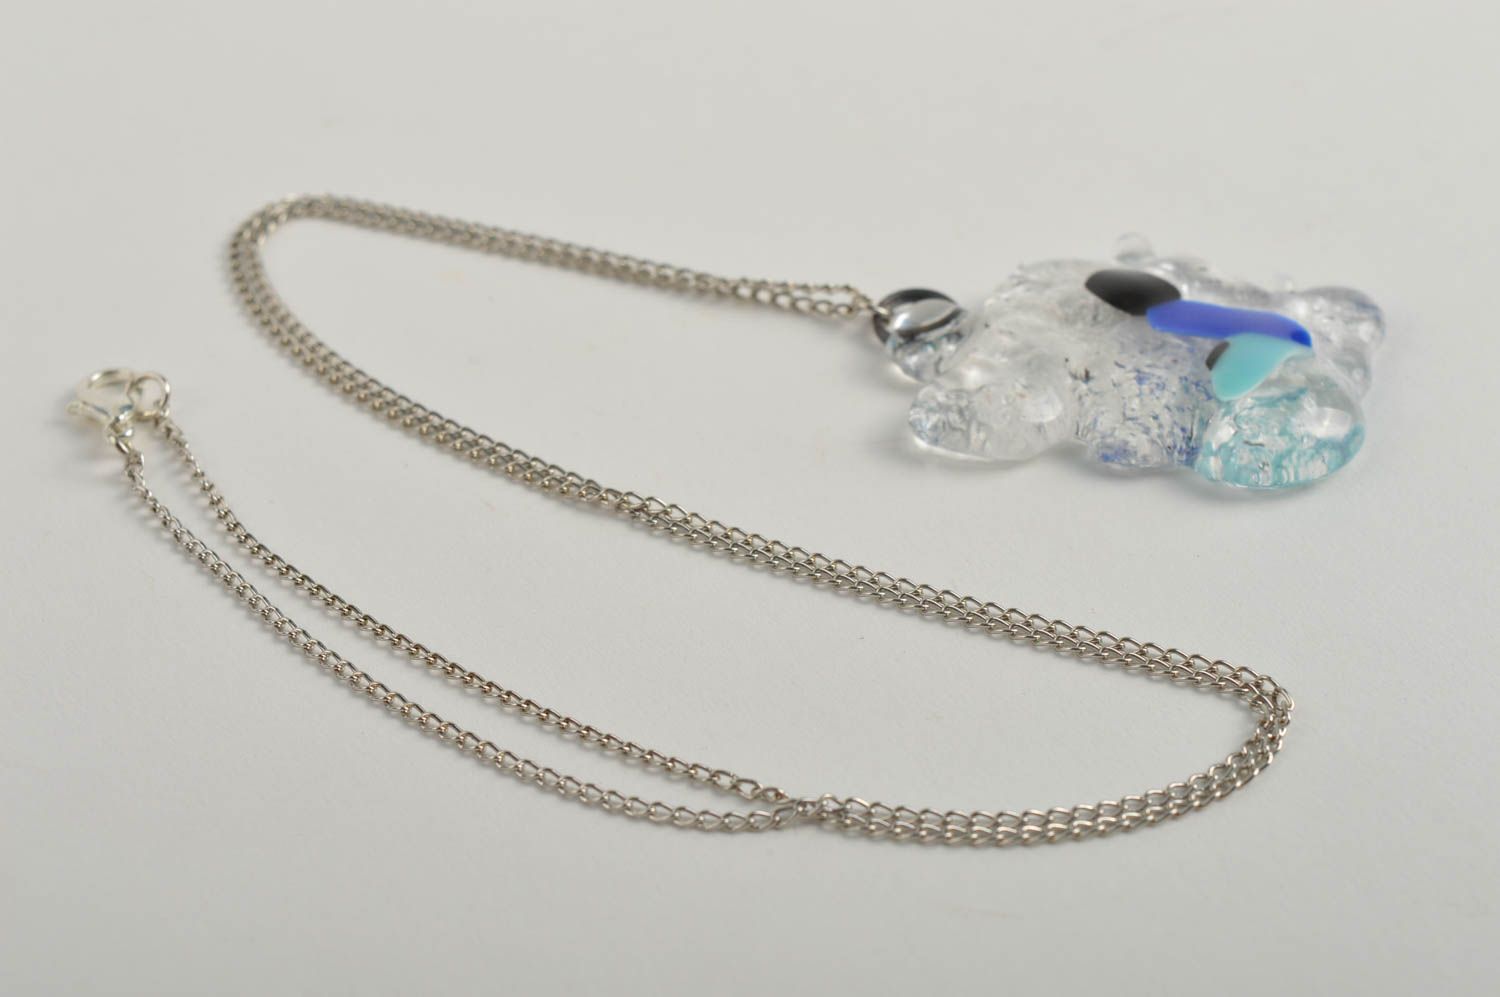 Unusual handmade glass pendant glass art artisan jewelry designs small gifts photo 5